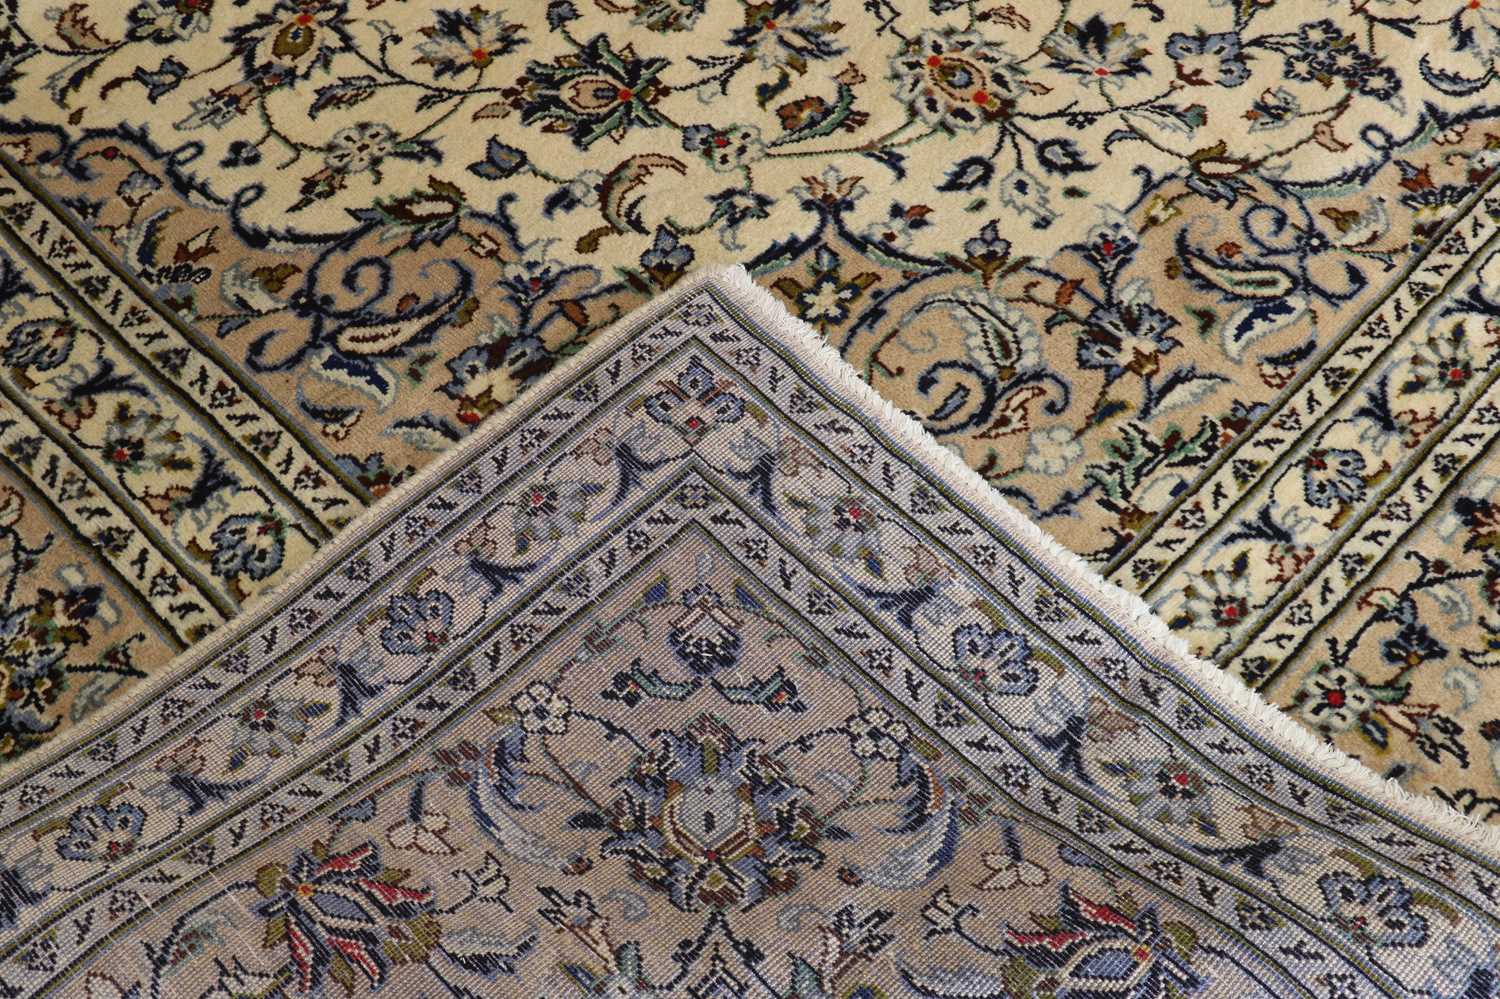 A Kashan carpet - Image 2 of 2